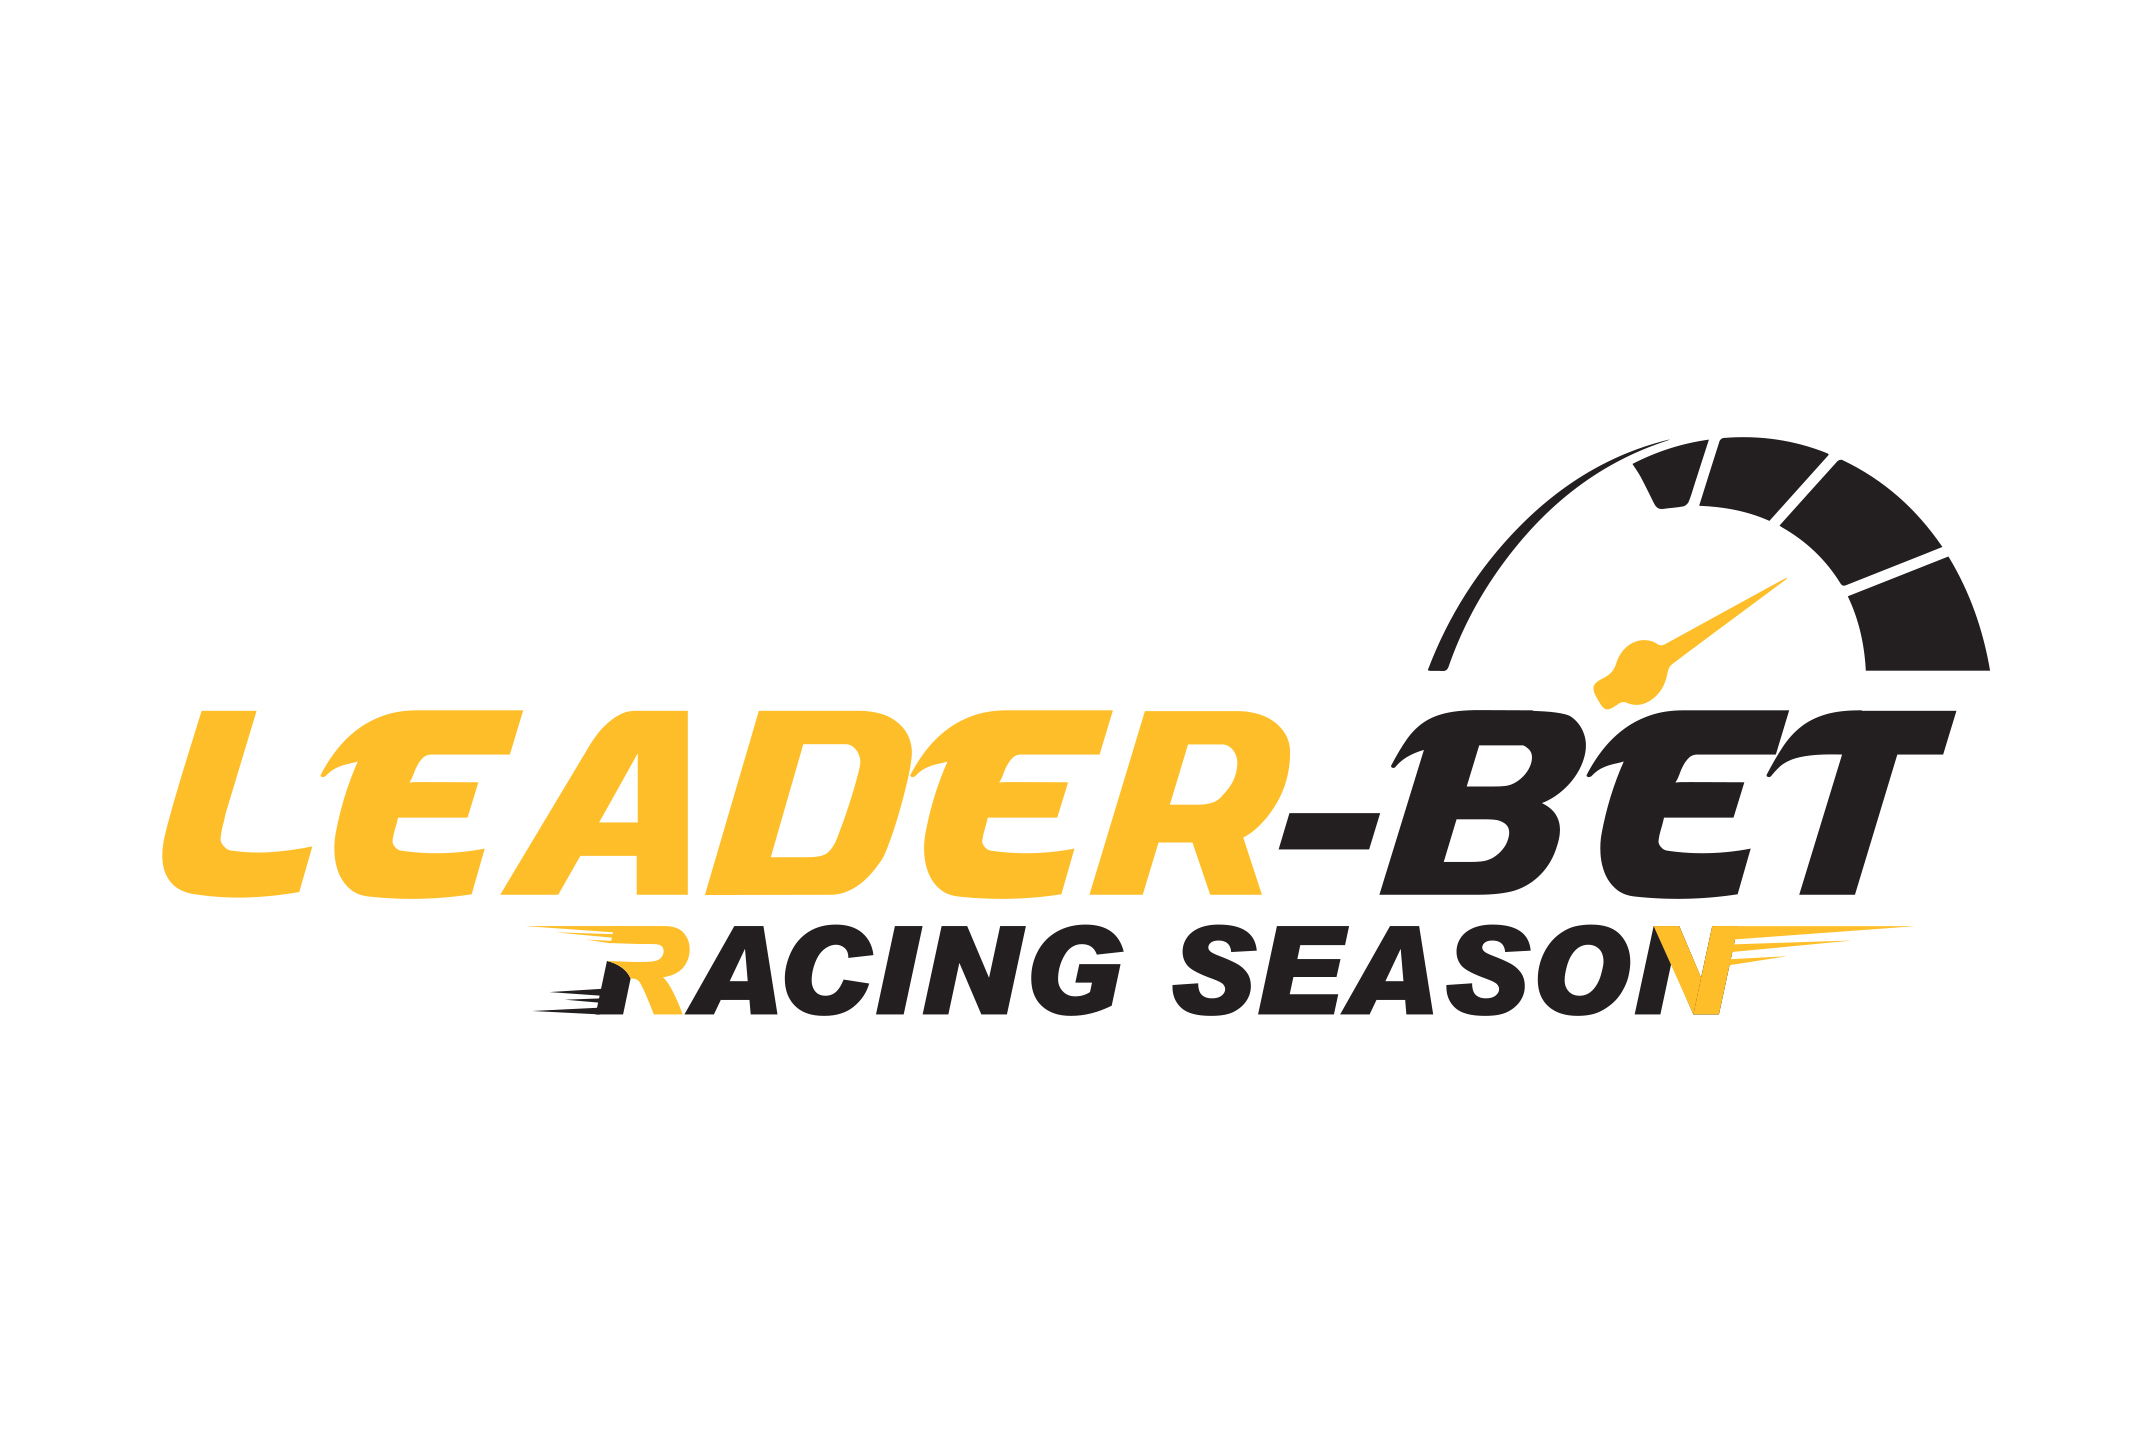 Liderbet Racing Season